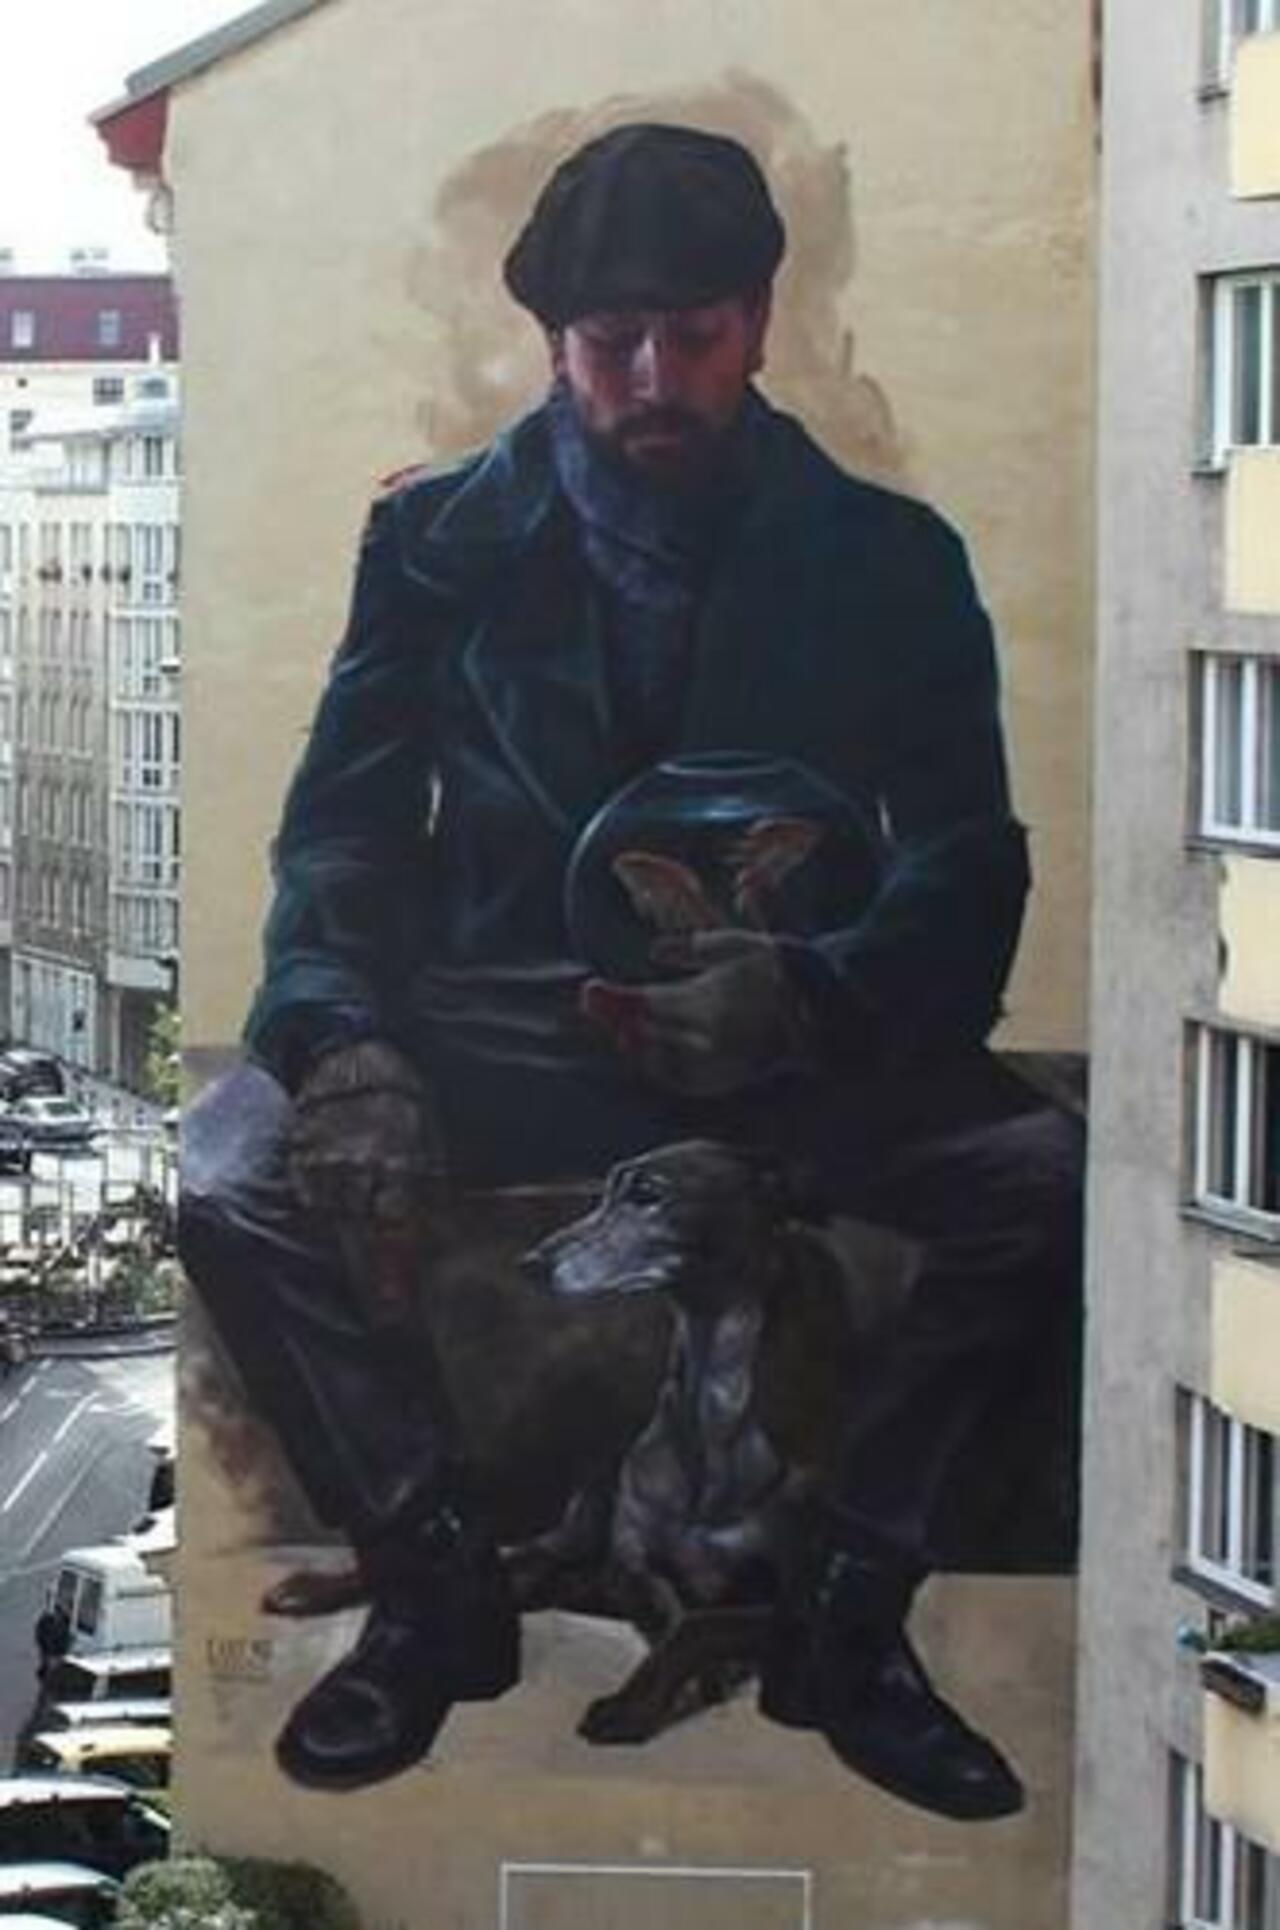 ... #Vienna #Autriche
#Evoca1 ()
#streetart #graffiti #art https://t.co/GKDmypwppo